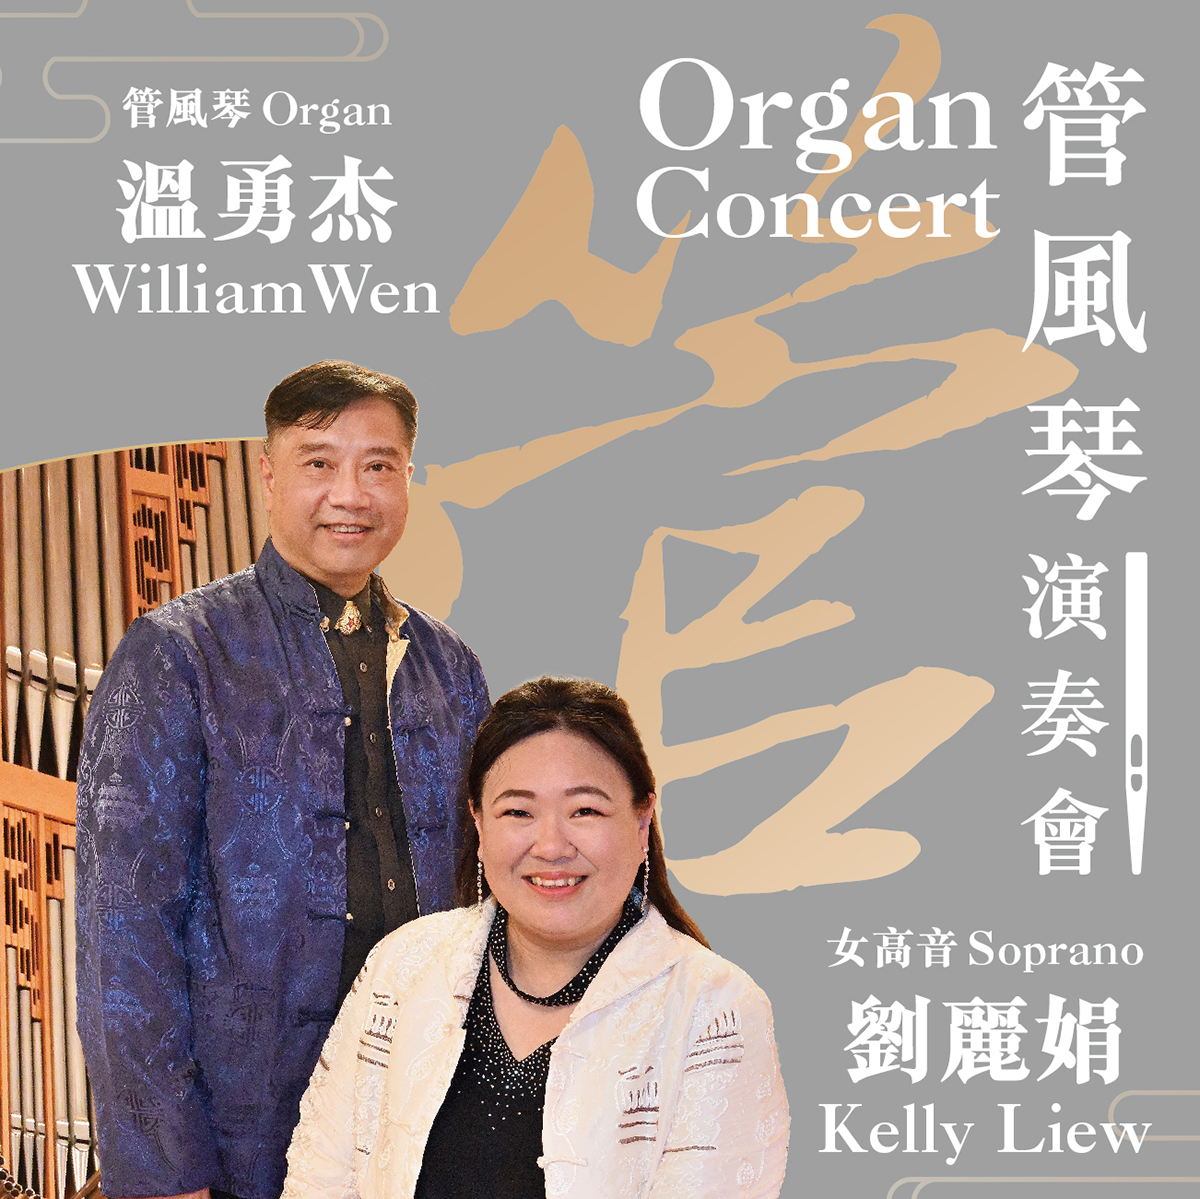 Organ Concert by William Wen & Kelly Liew